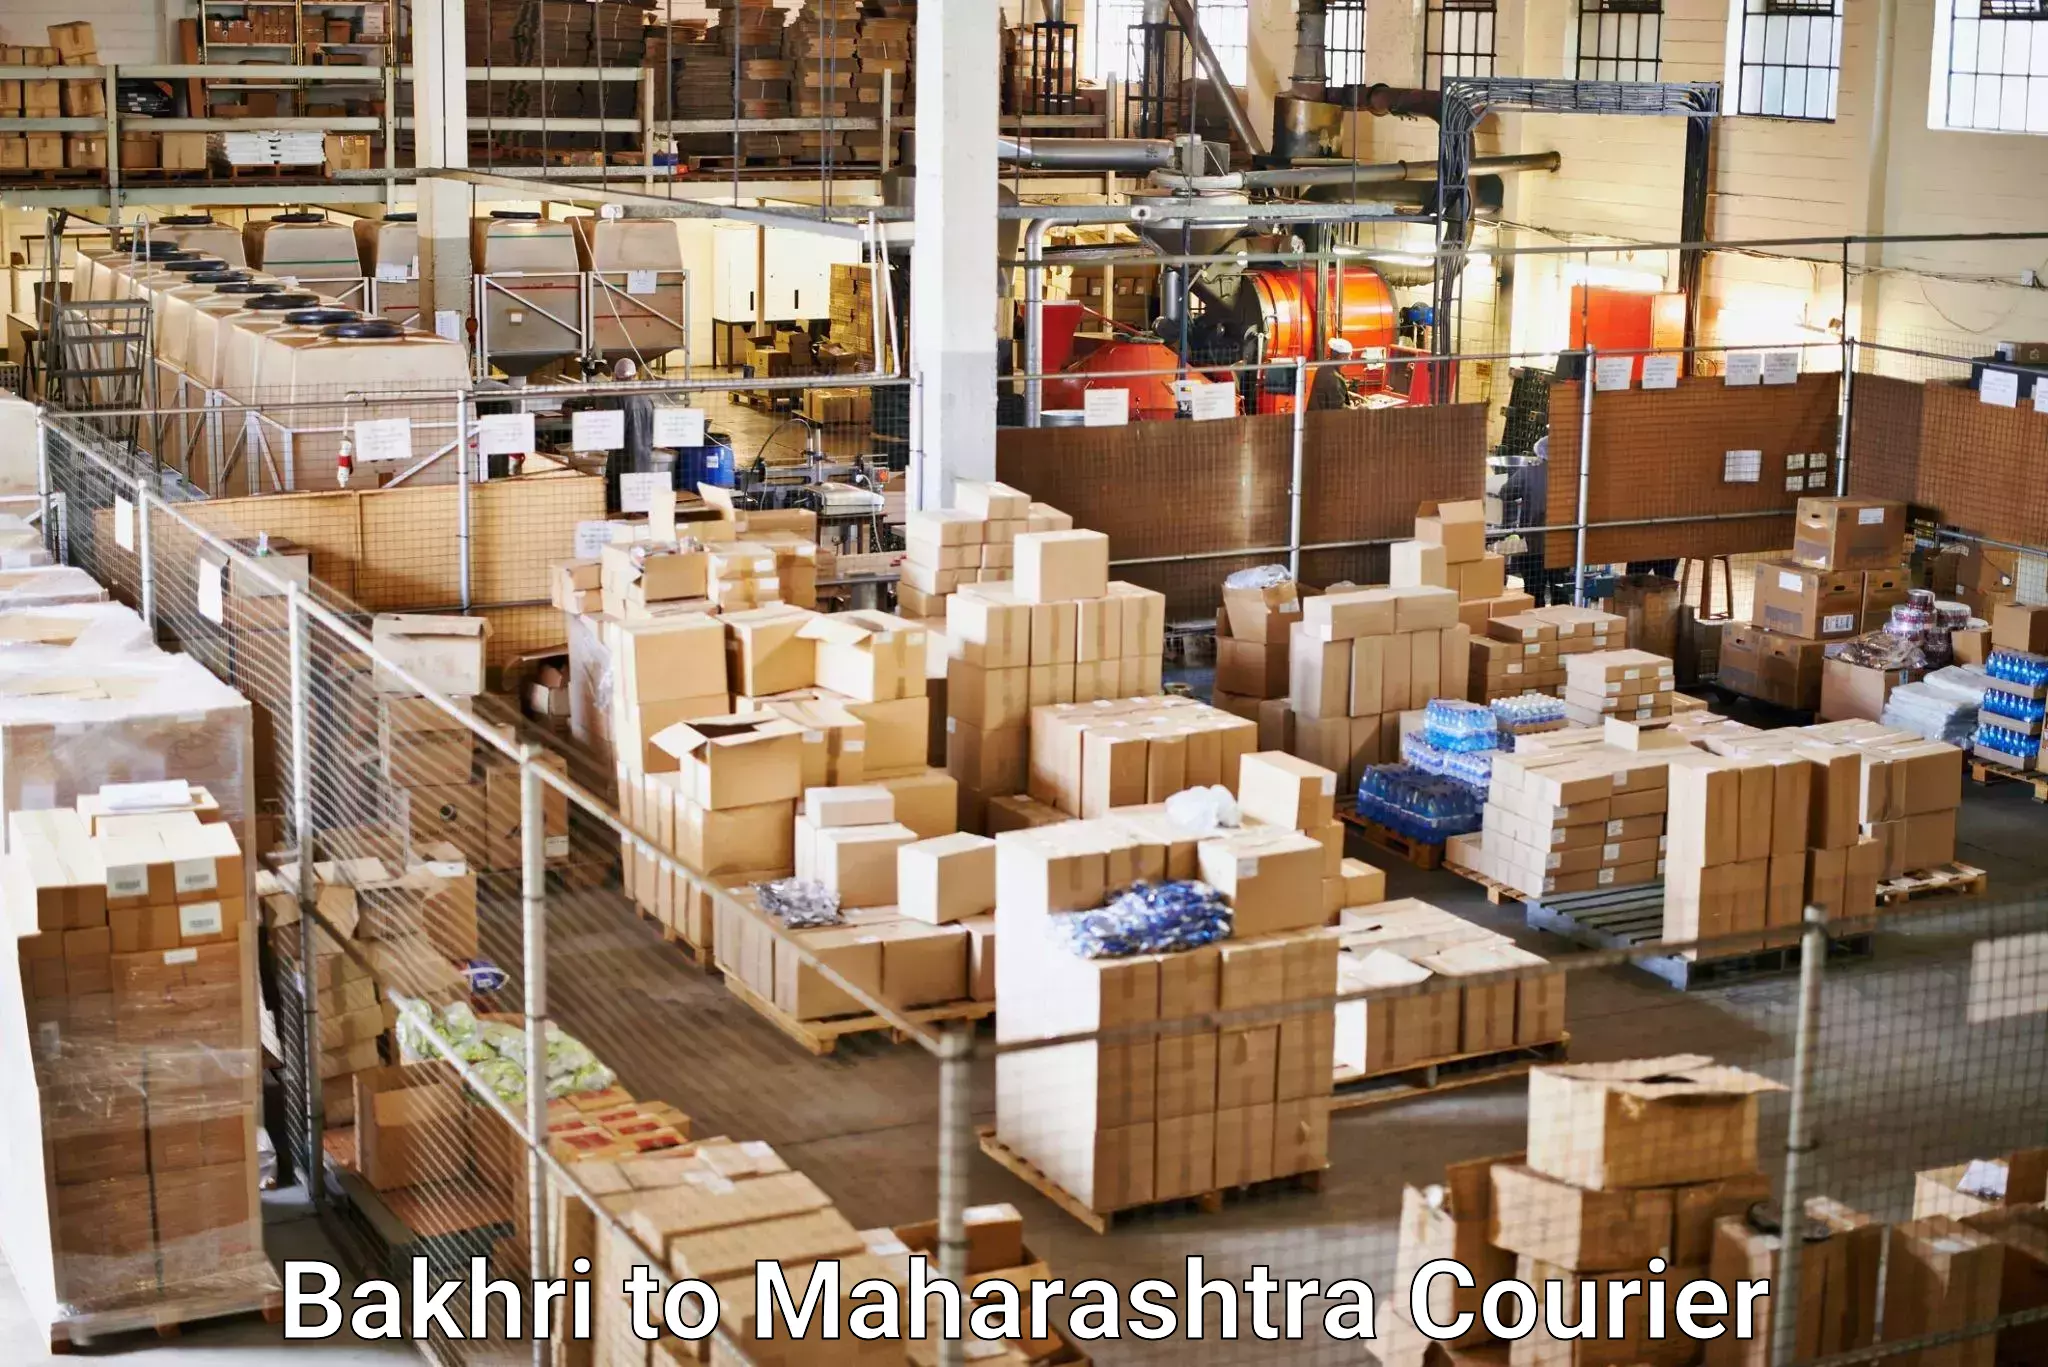 Secure shipping methods in Bakhri to Lonar